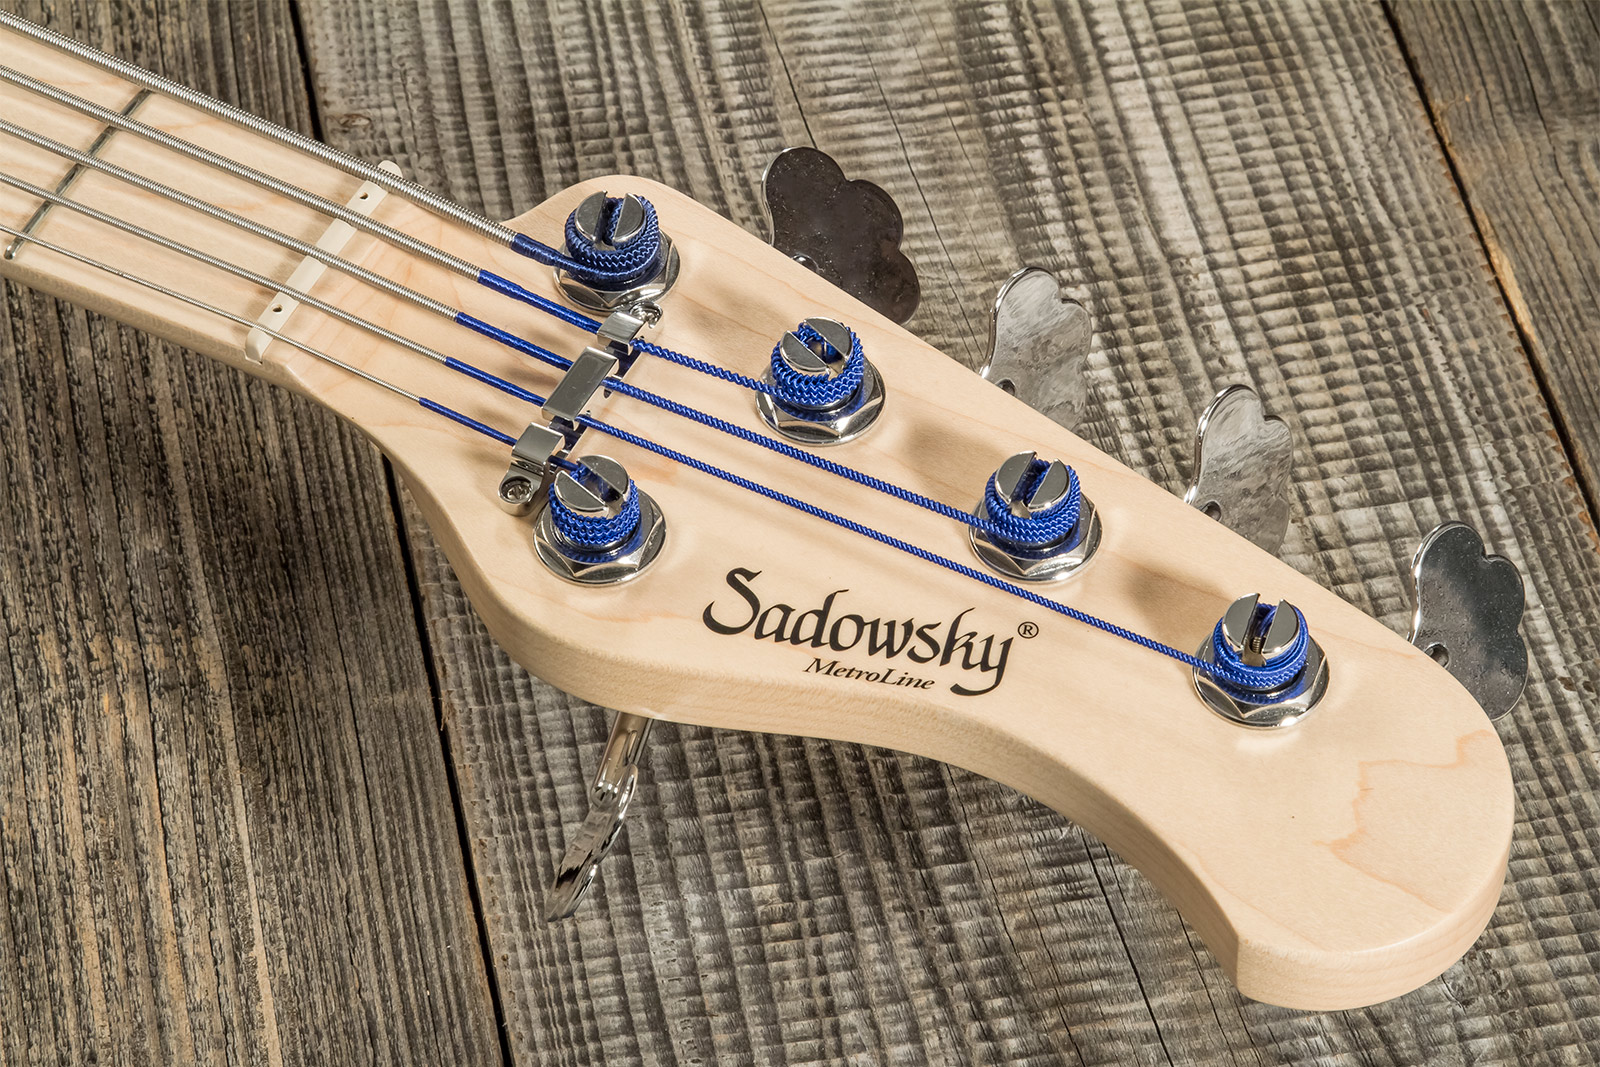 Sadowsky Single Cut Bass 24f Ash 5c Metroline All Active Mn - Satin Black Pearl - Solidbody E-bass - Variation 7